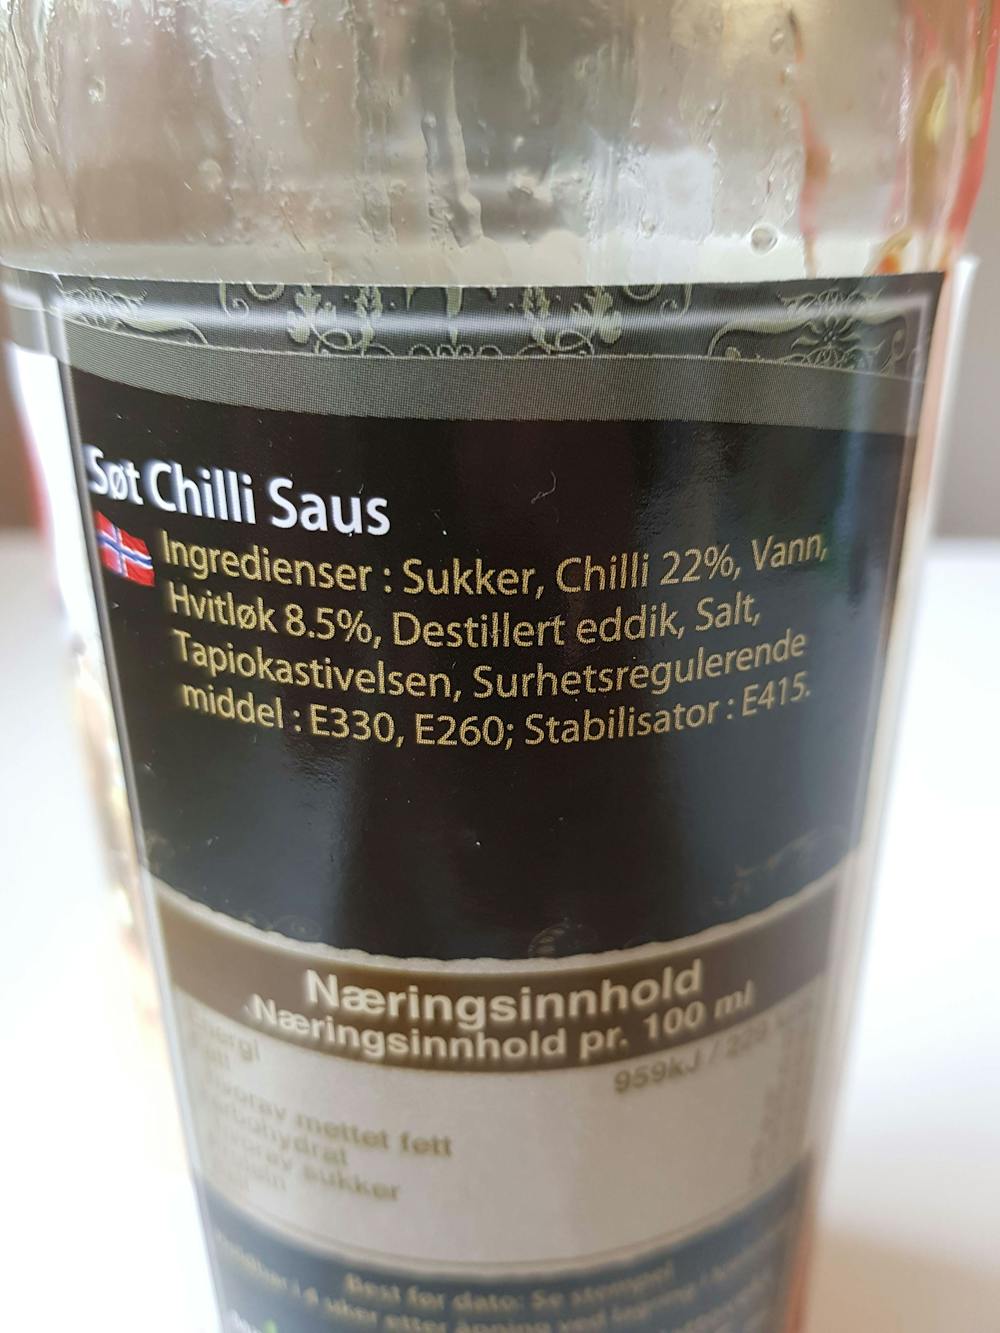 Ingredienslisten til Exotic food Søt chili saus